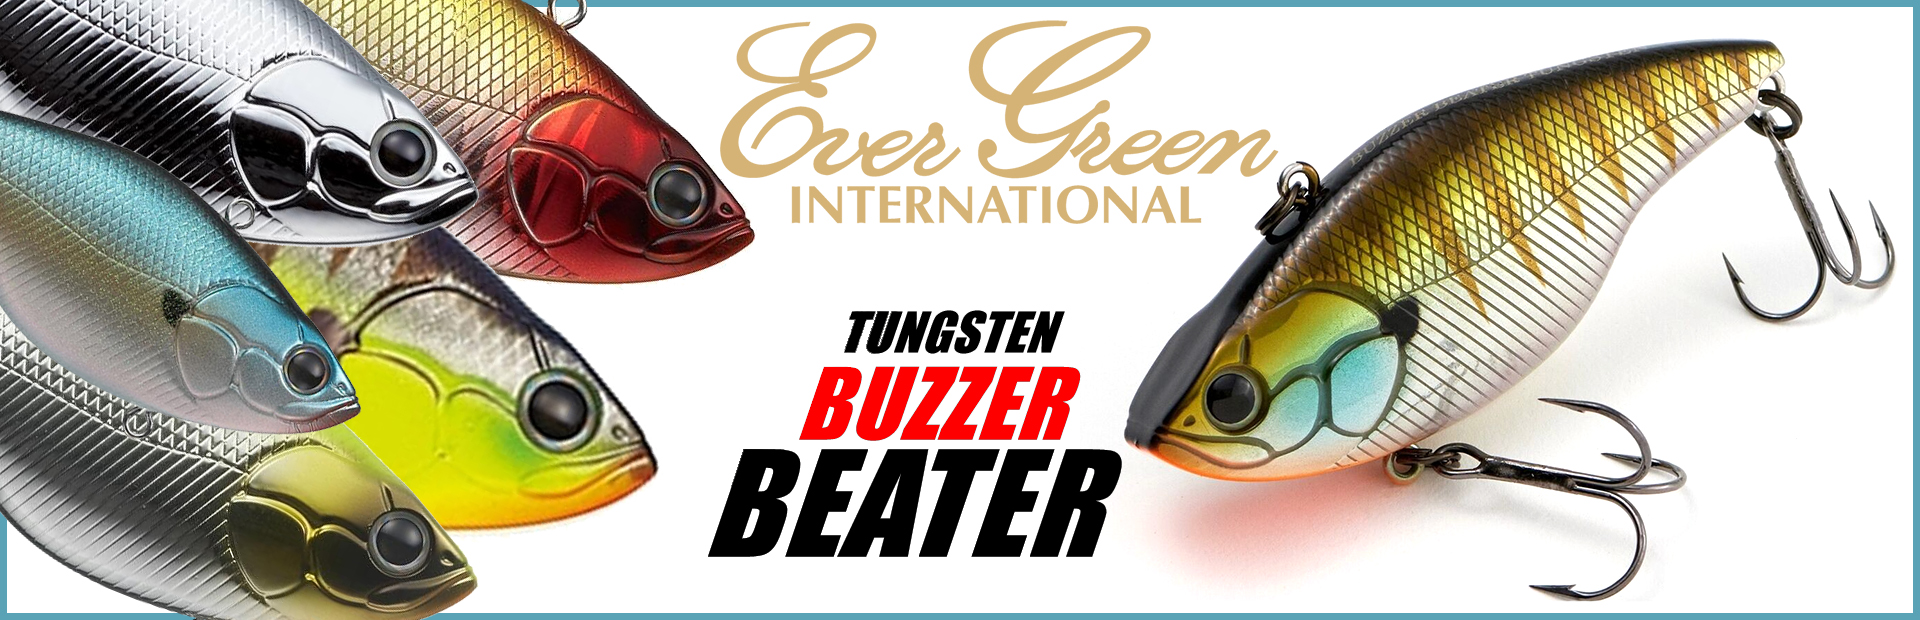 https://www.bigfish.ro/static/i/slide/evergreen-buzzer-beater-tungsten-big.jpg